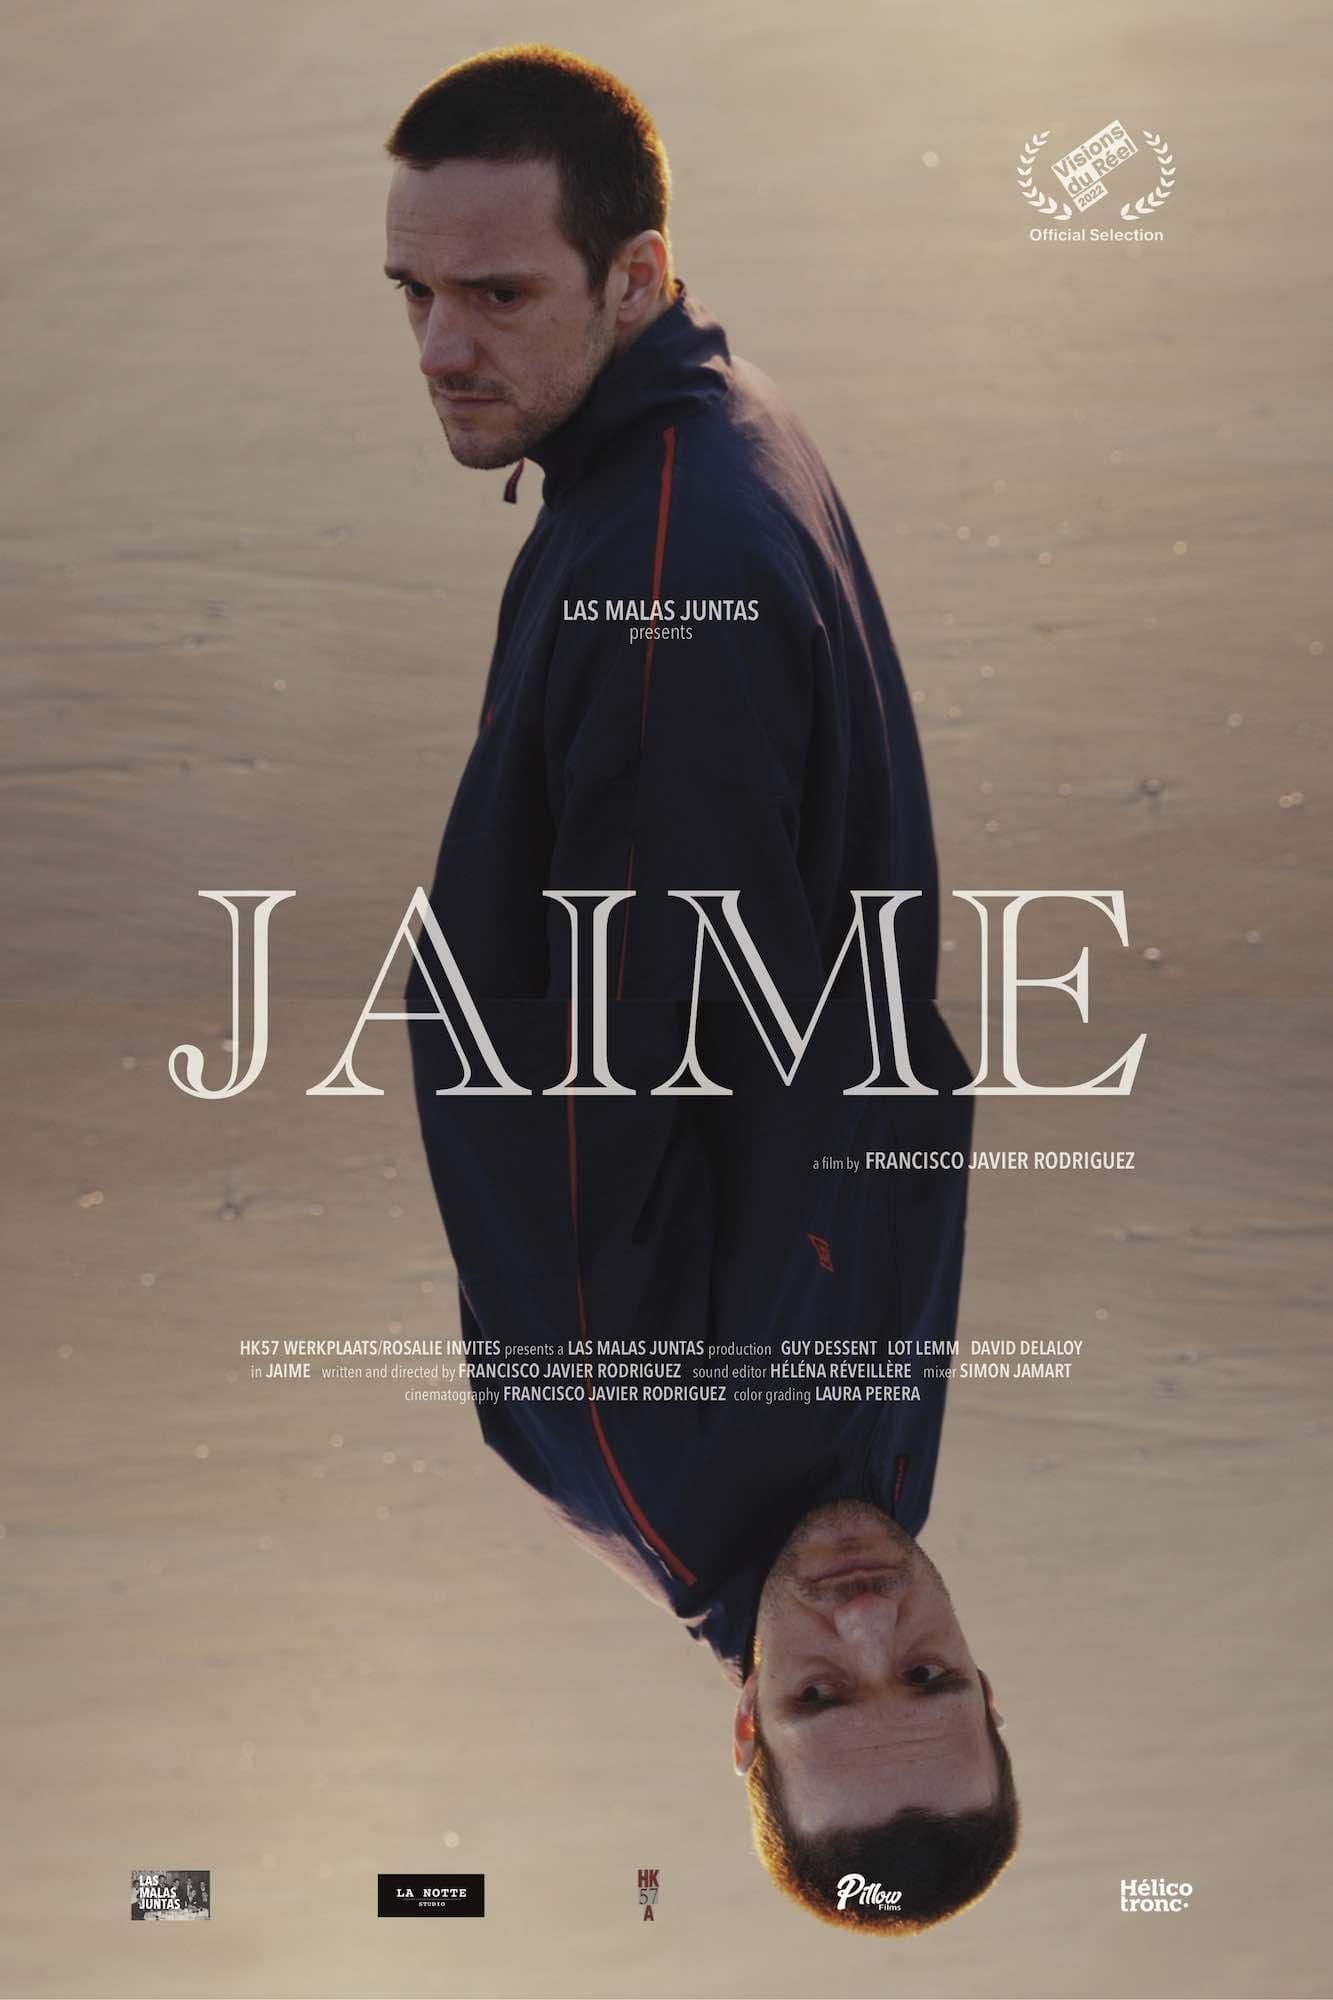 Jaime poster